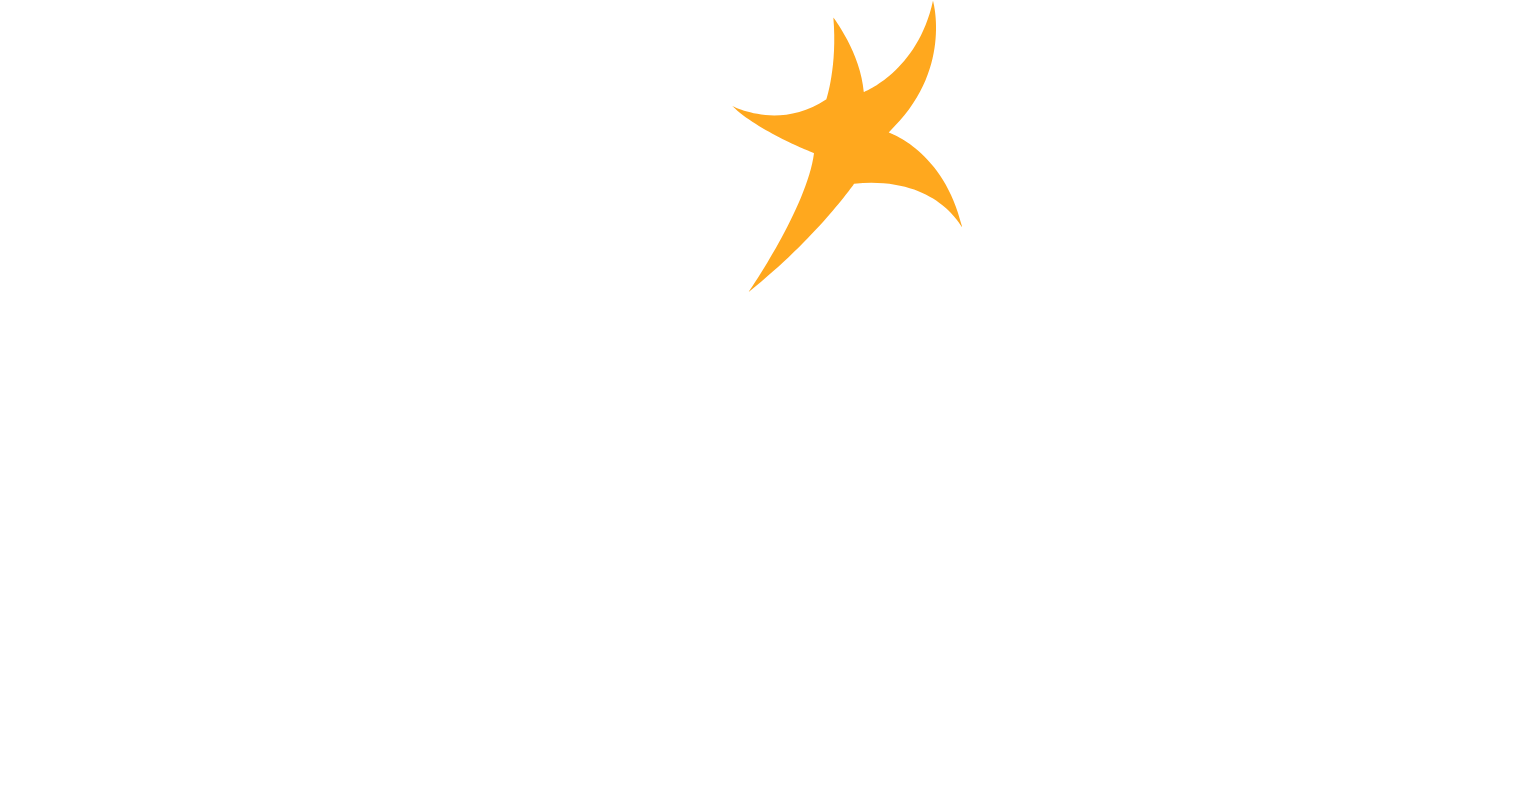 DaVita logo large for dark backgrounds (transparent PNG)